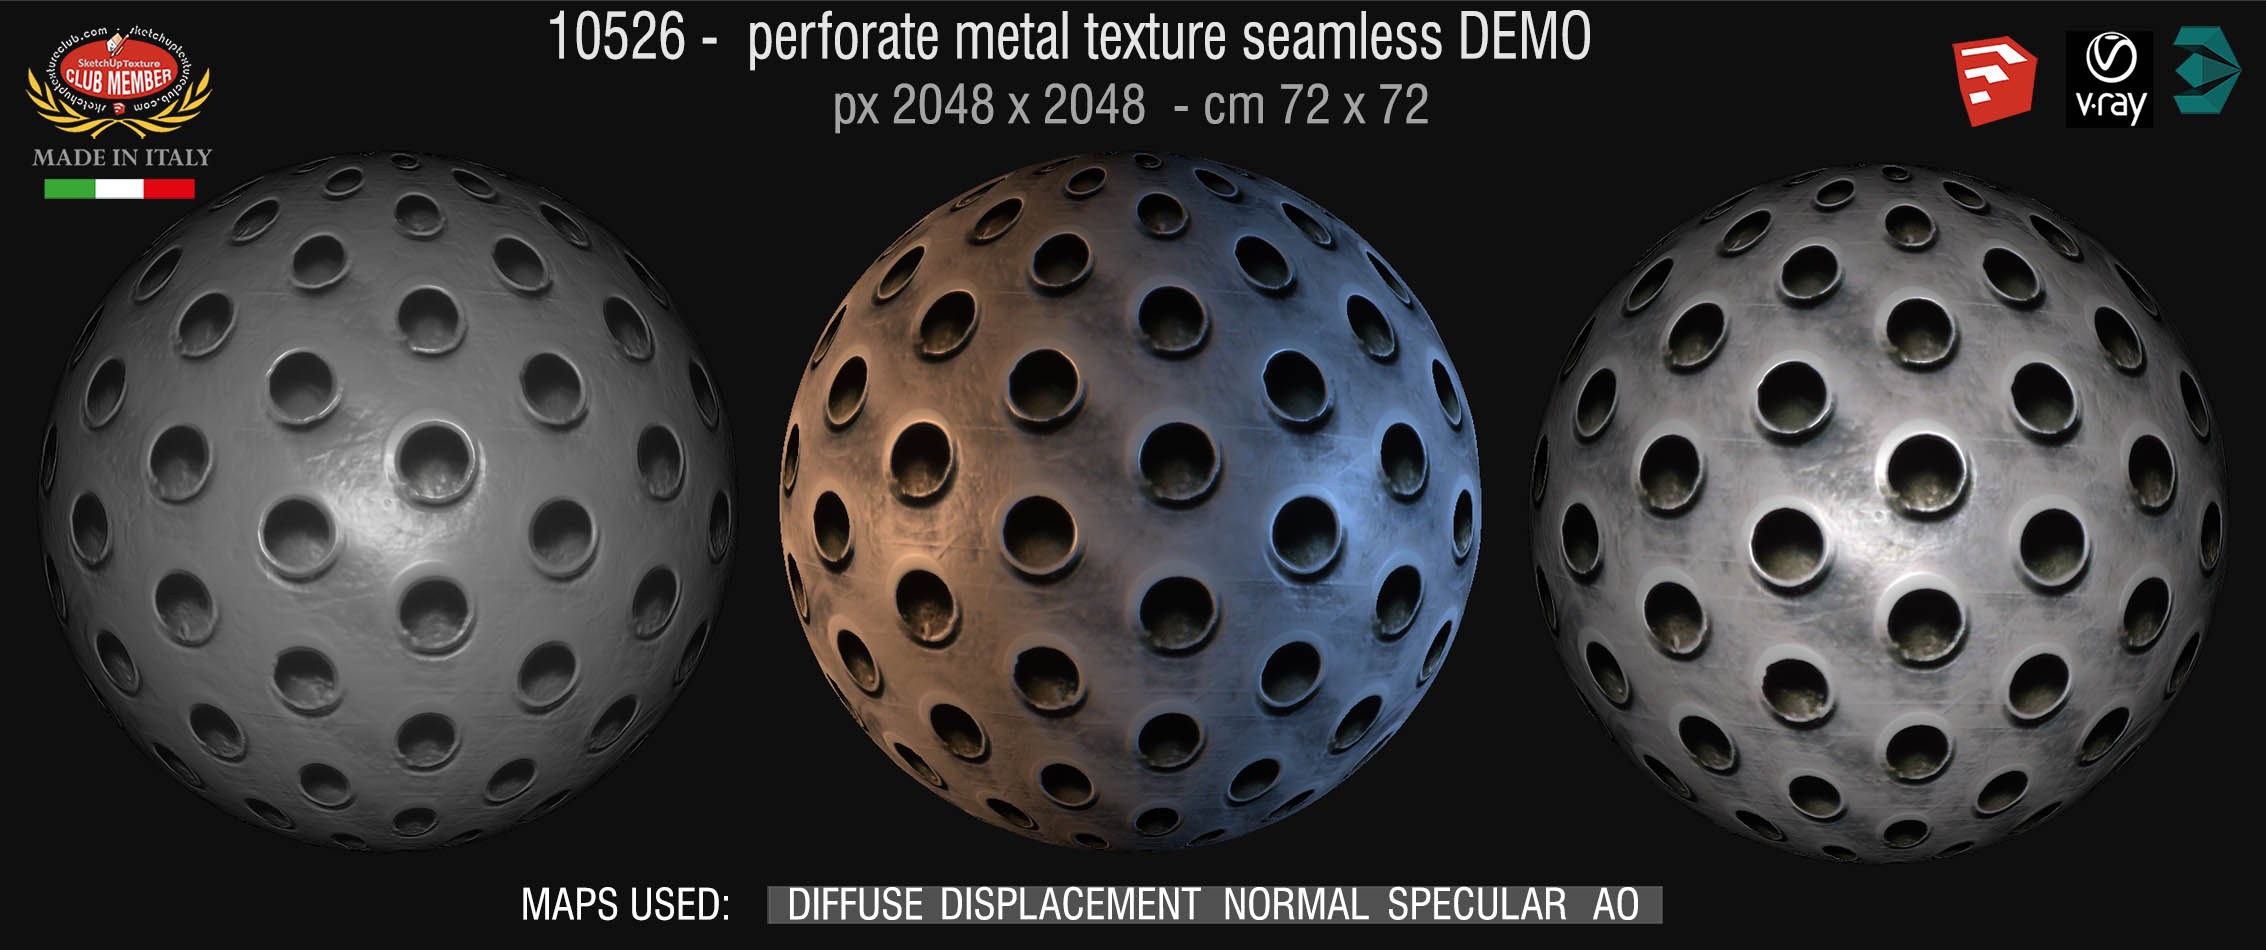 10526 HR Perforate metal texture seamless + maps DEMO